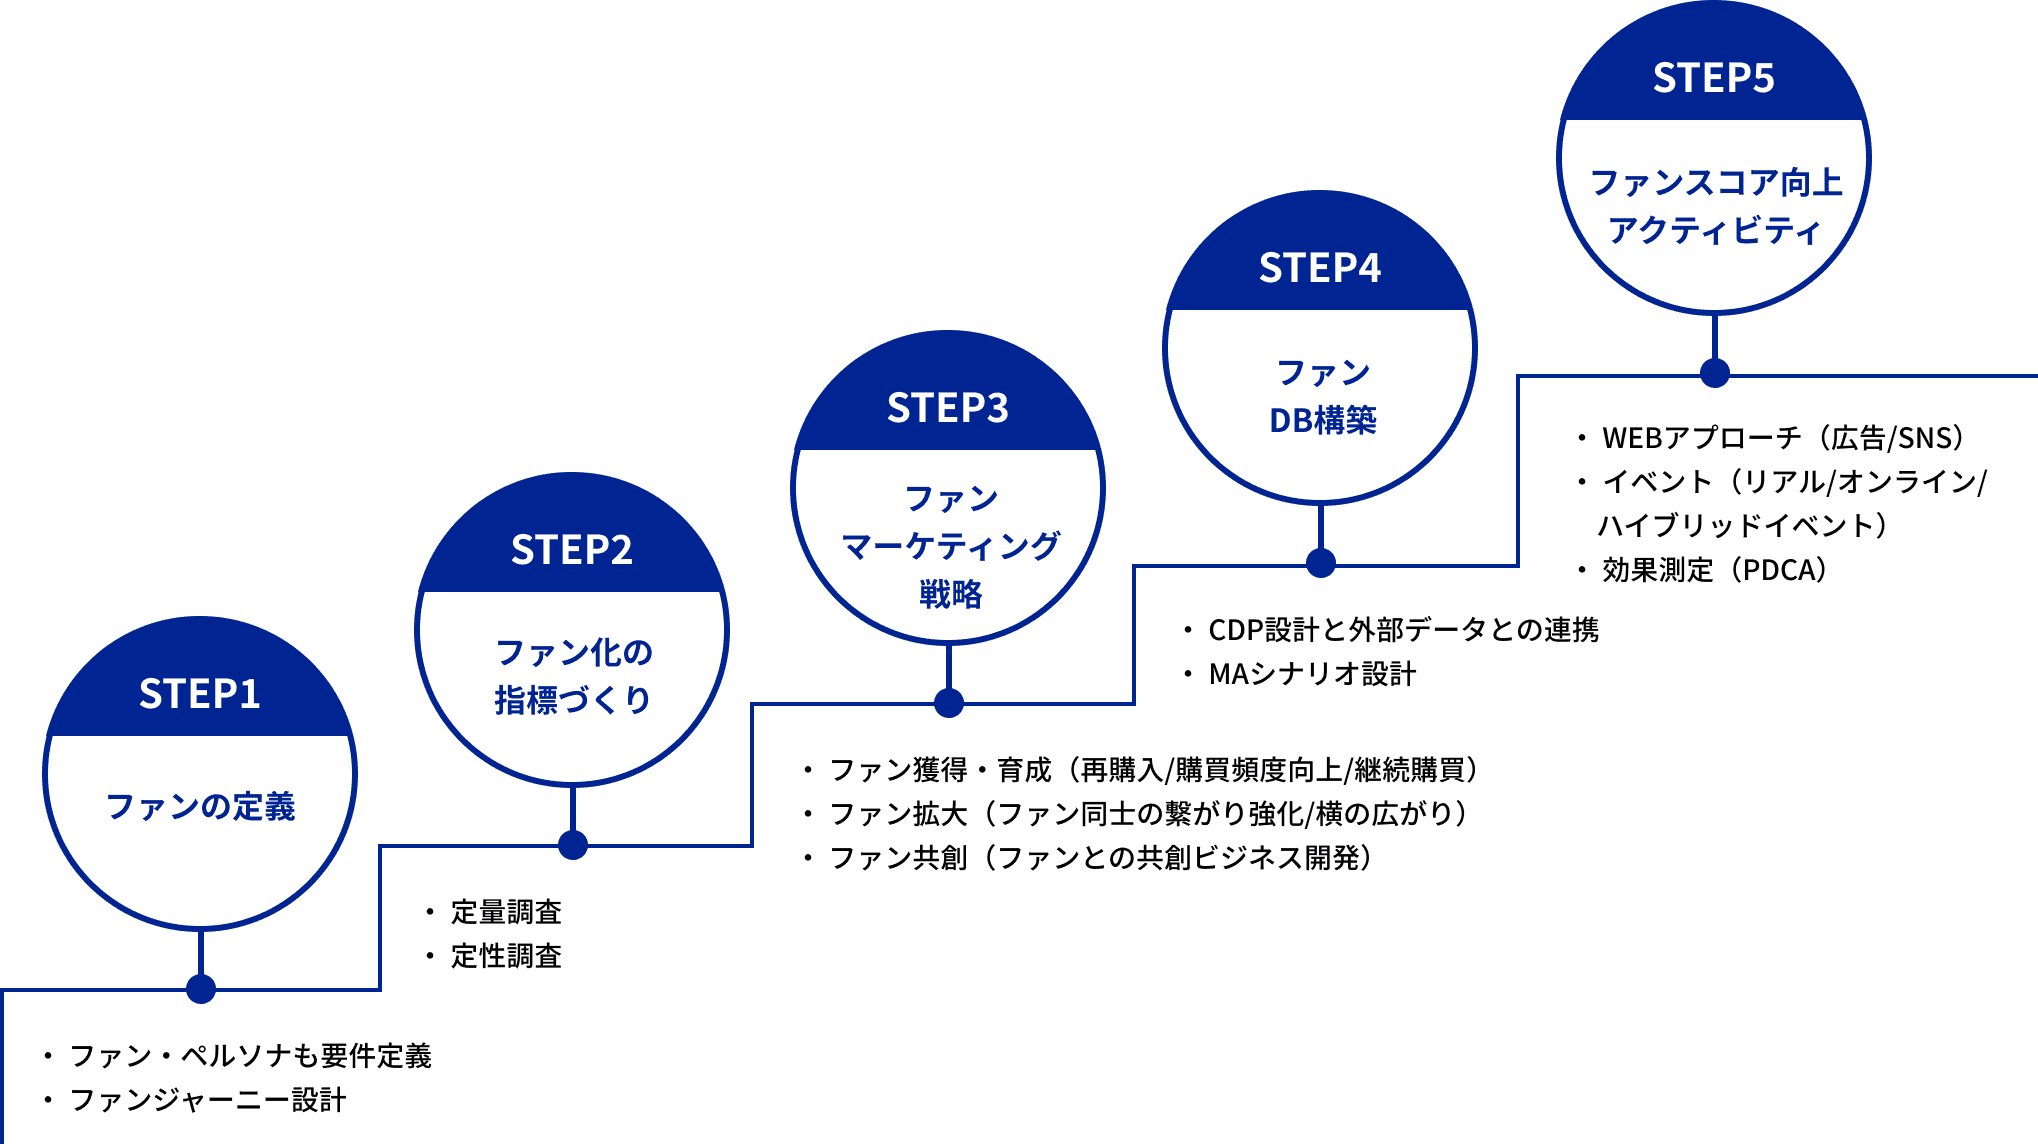 STEP1:ファンの定義 ・ファン/ペルソナ要件定義・ファンジャーニー設計　STEP2:ファン化の指標づくり ・定量調査・定性調査　STEP3:ファンマーケティング戦略 ・ファン獲得・育成（再購入/購買頻度向上/継続購買）・ファン拡大（ファン同士の繋がり強化/横の広がり）・ファン共創（ファンとの共創ビジネス開発）　STEP4:ファンDB構築 ・CDP設計と外部データとの連携・MAシナリオ設計　STEP5:ファンスコア向上アクティビティ ・WEBアプローチ（広告/SNS）・イベント（リアル/オンライン/ハイブリッドイベント）・効果測定（PDCA）